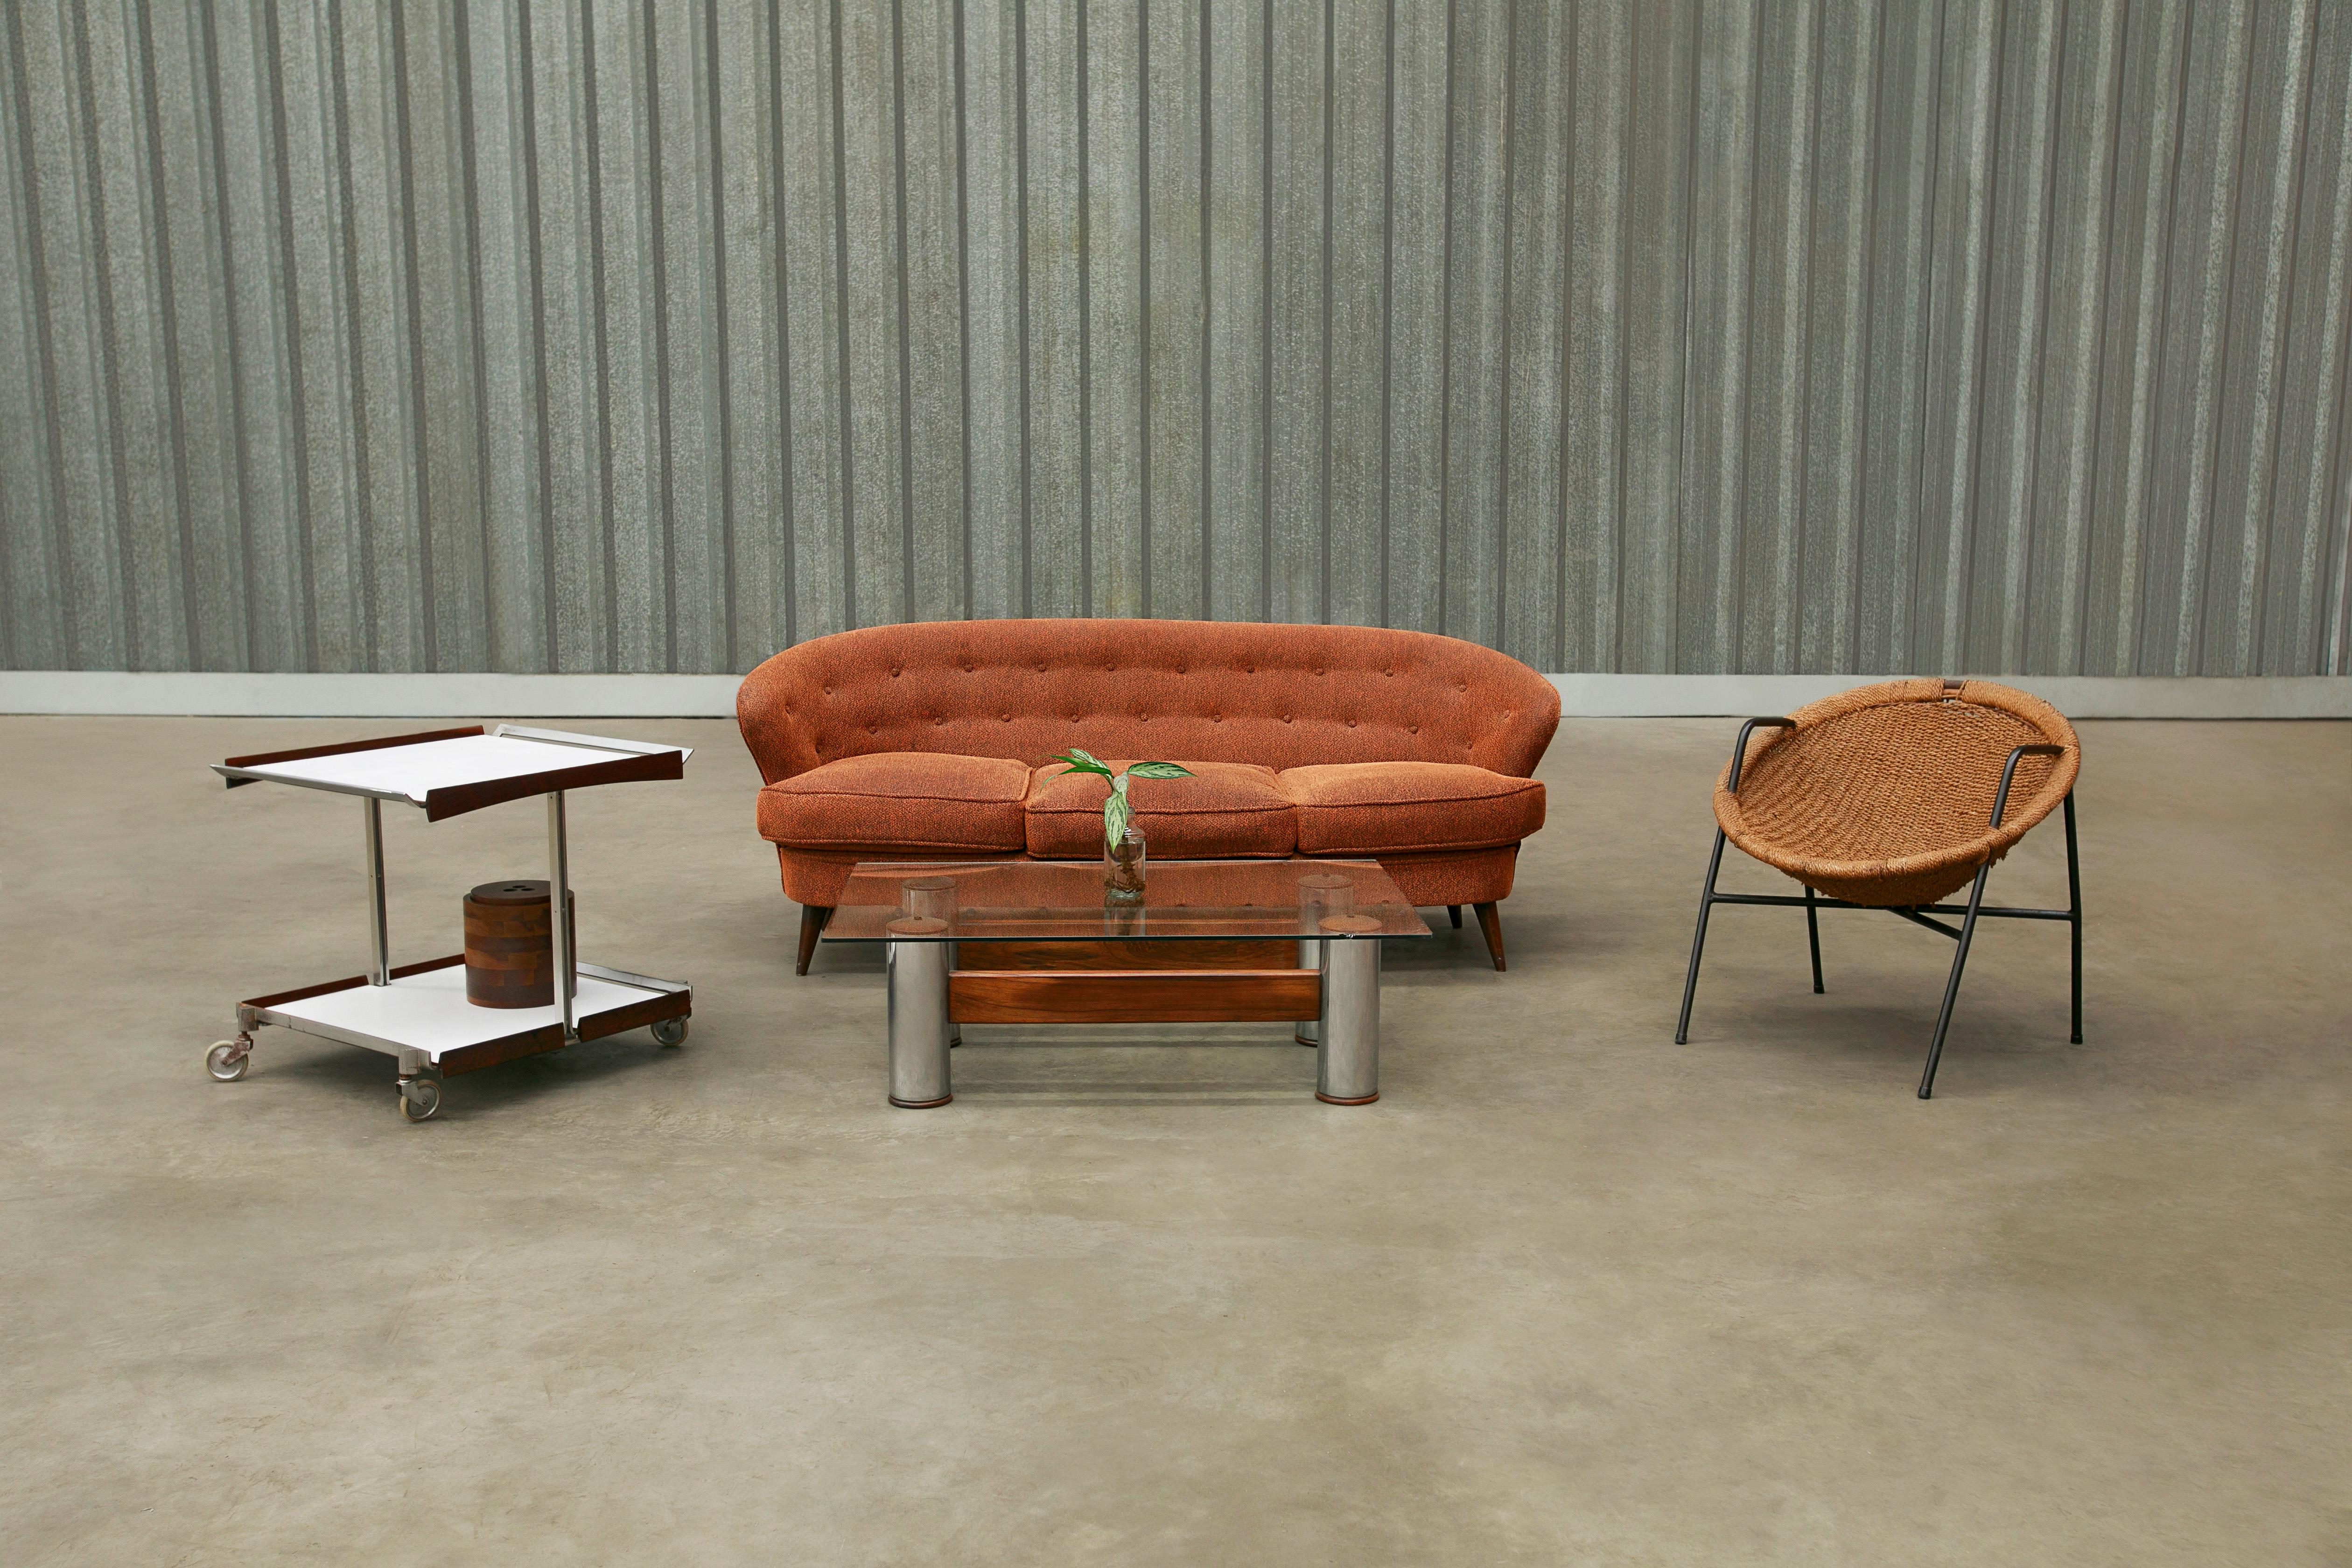 1960's Brazilian Modern Sofa “Concha” in Hardwood & Fabric, by Joaquim Tenreiro In Good Condition For Sale In New York, NY